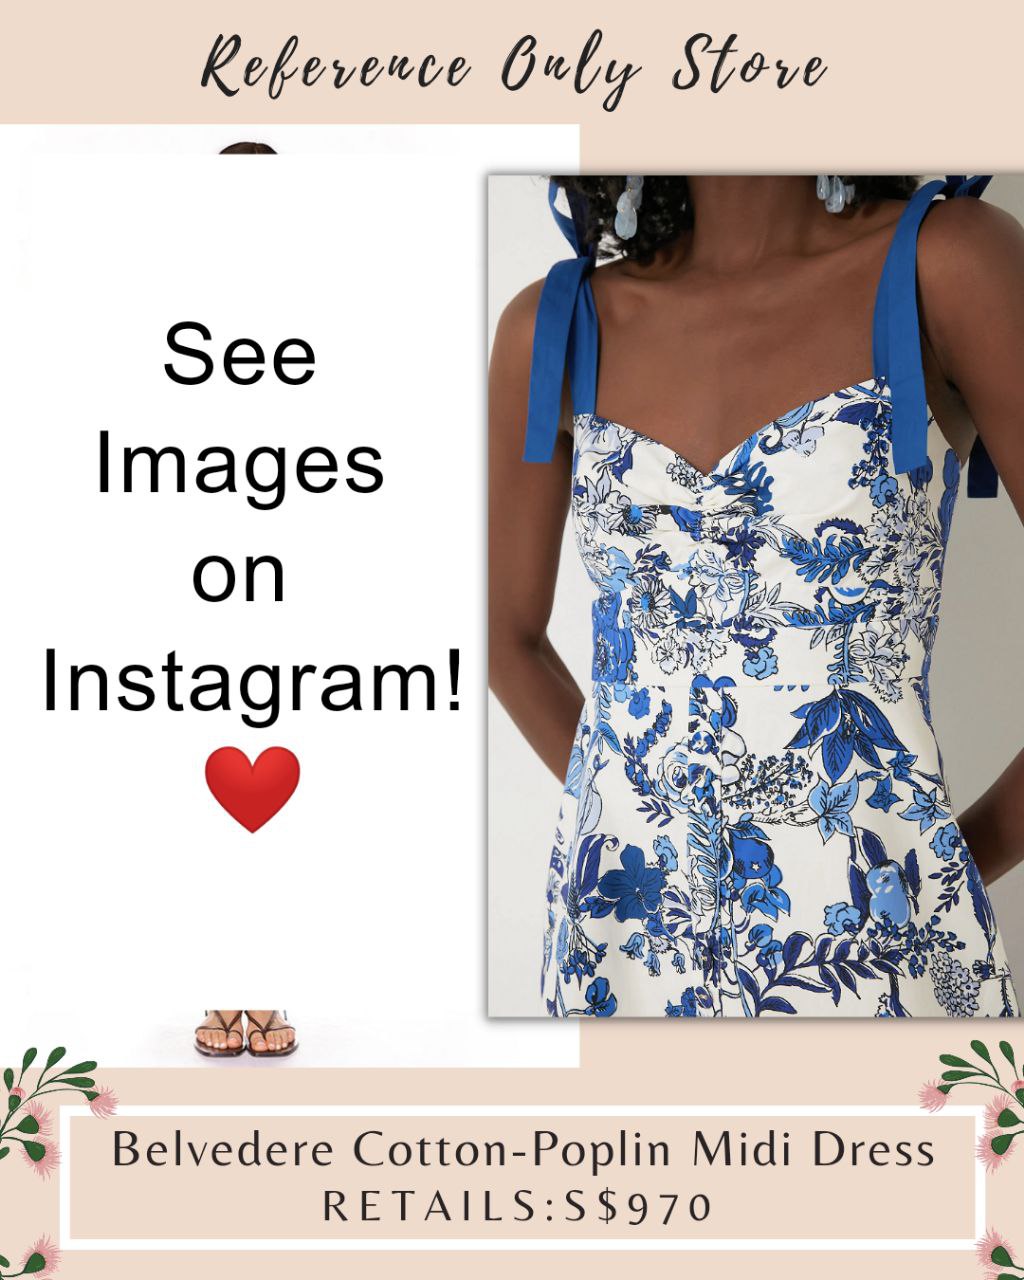 Cc Belvedere cotton poplin midi dress